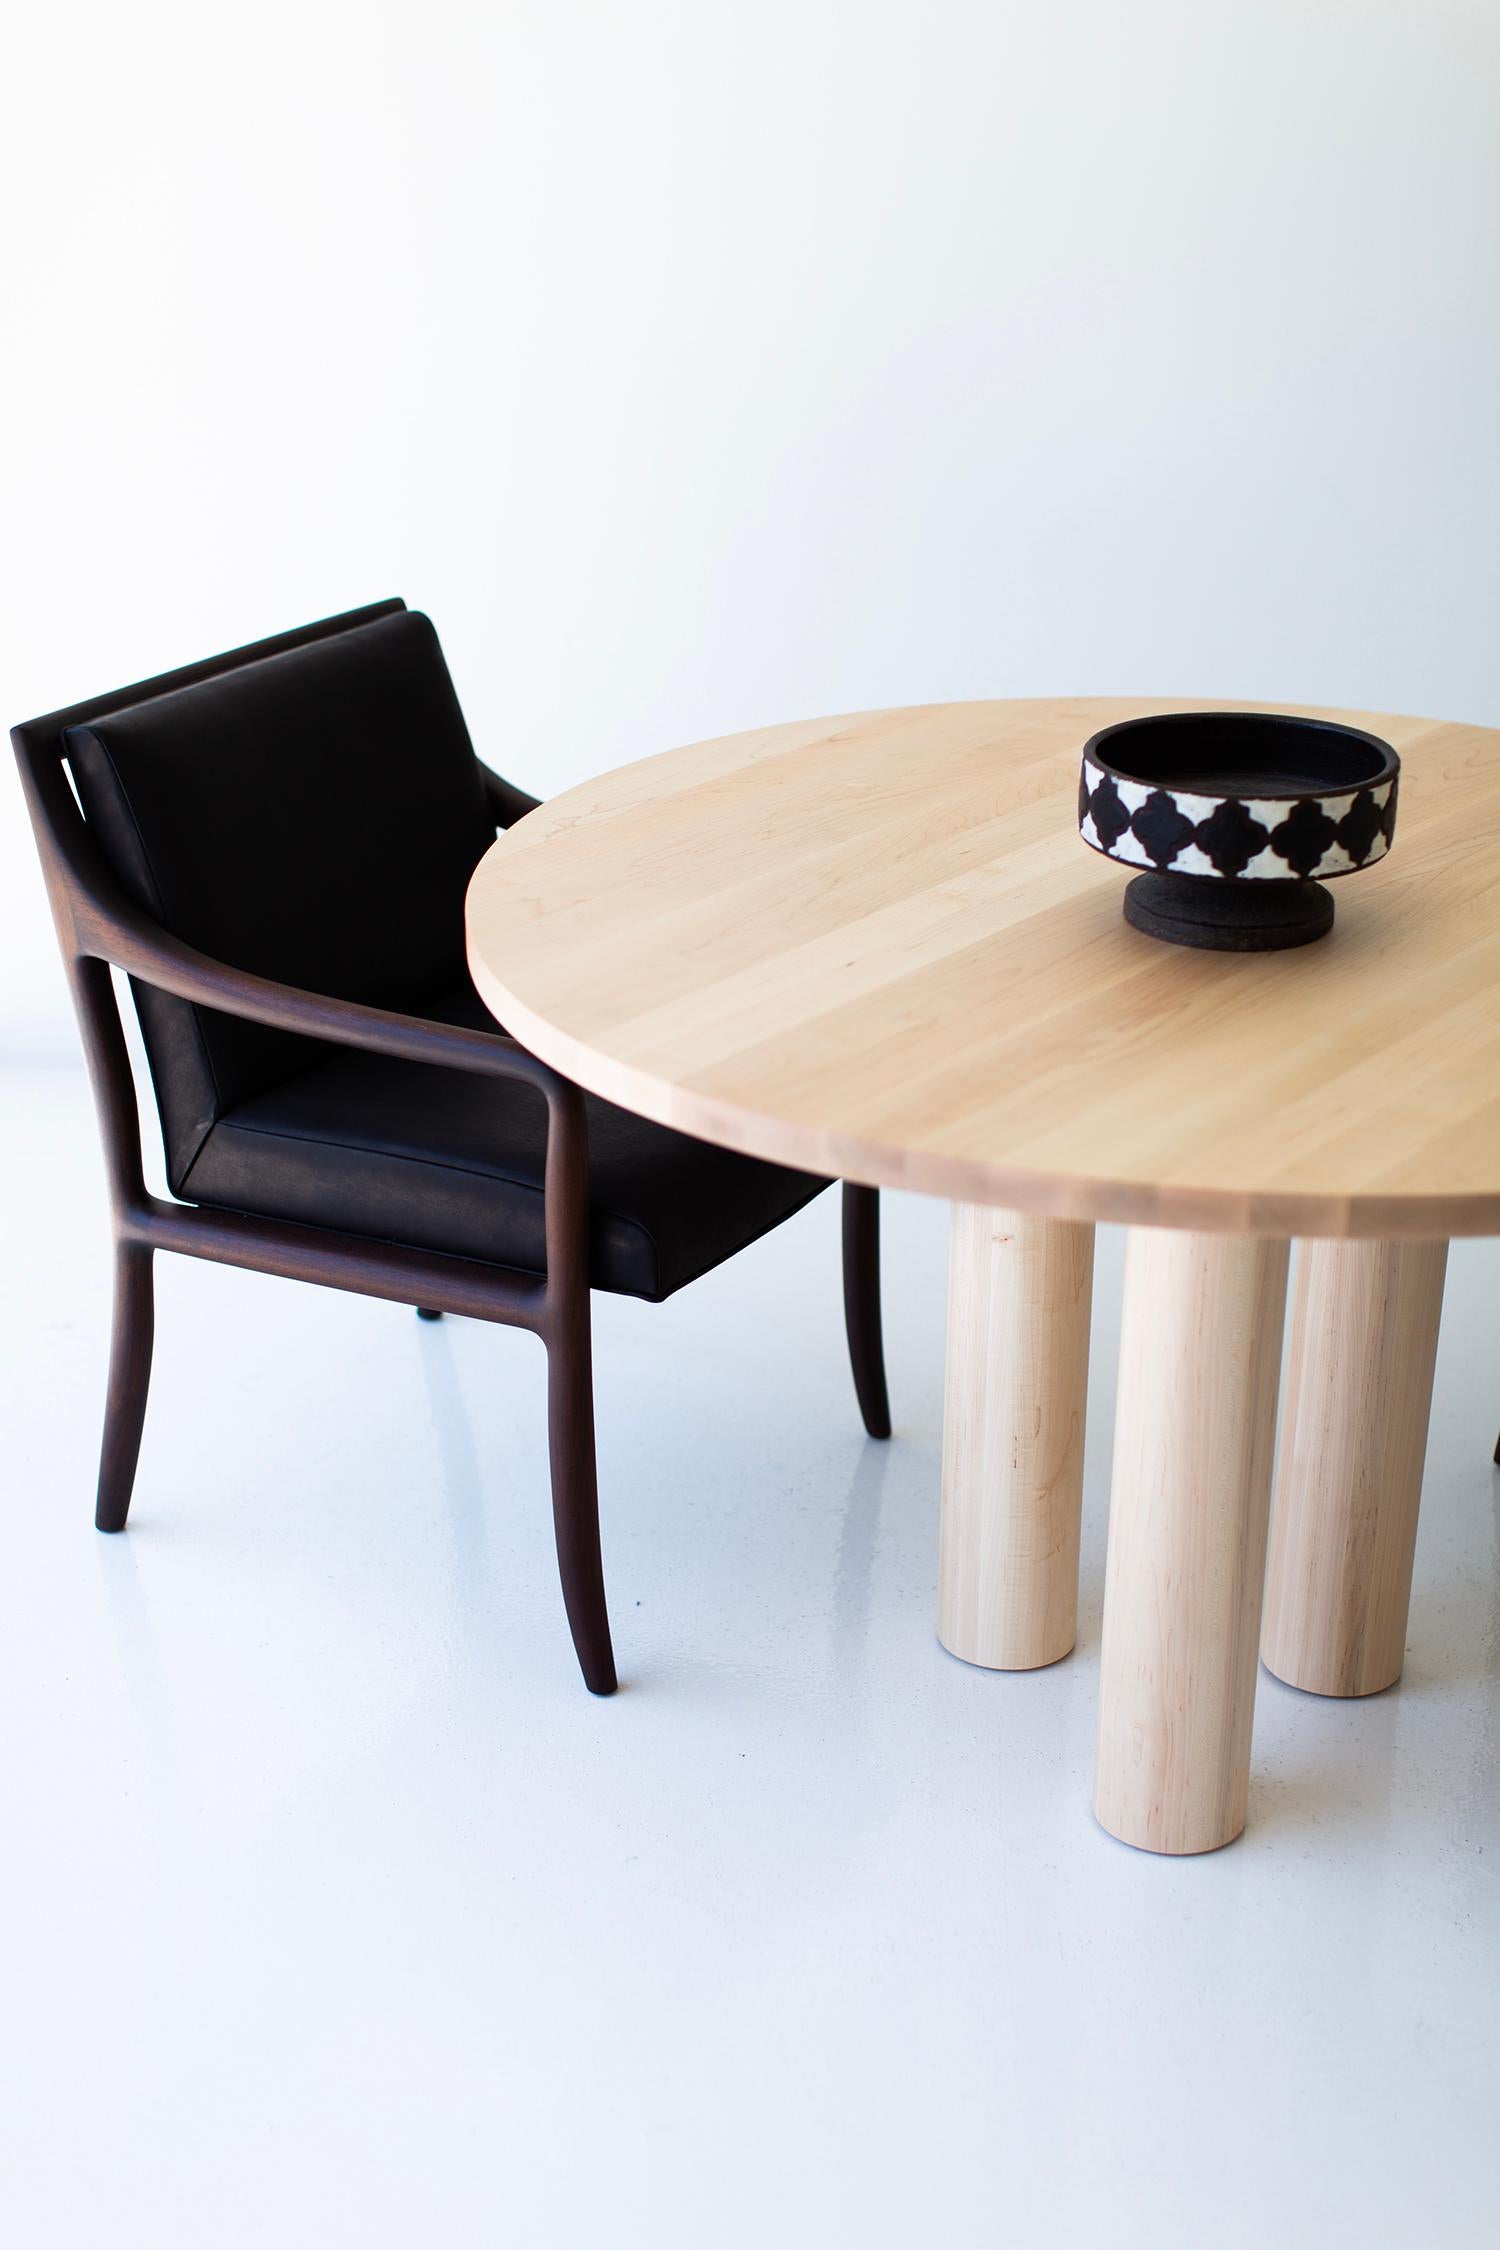 American Bertu Dining Table, Modern Round Dining Table, Dining Table, Maple, Cava For Sale